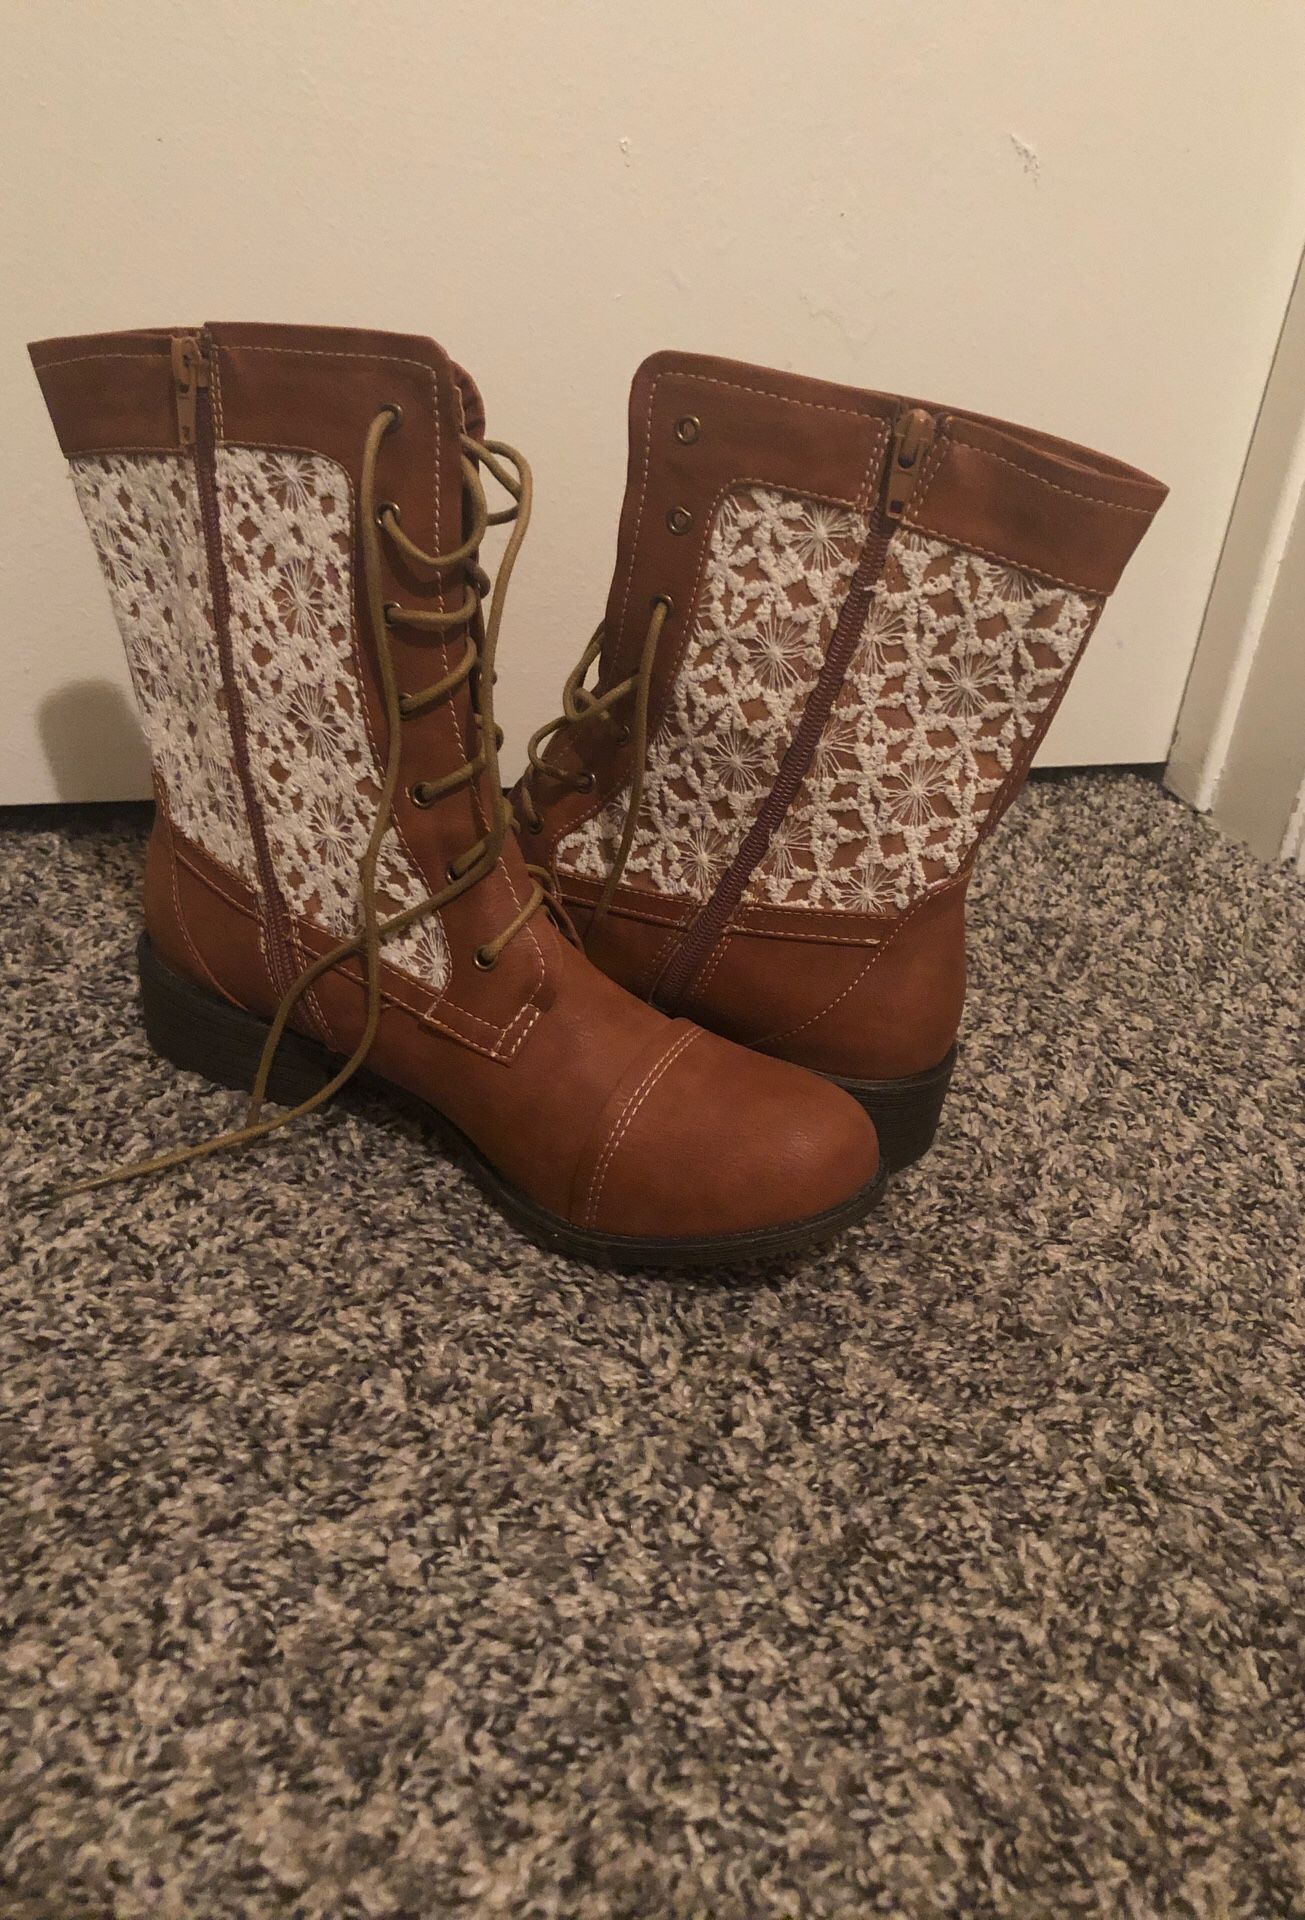 Brand new women’s boots